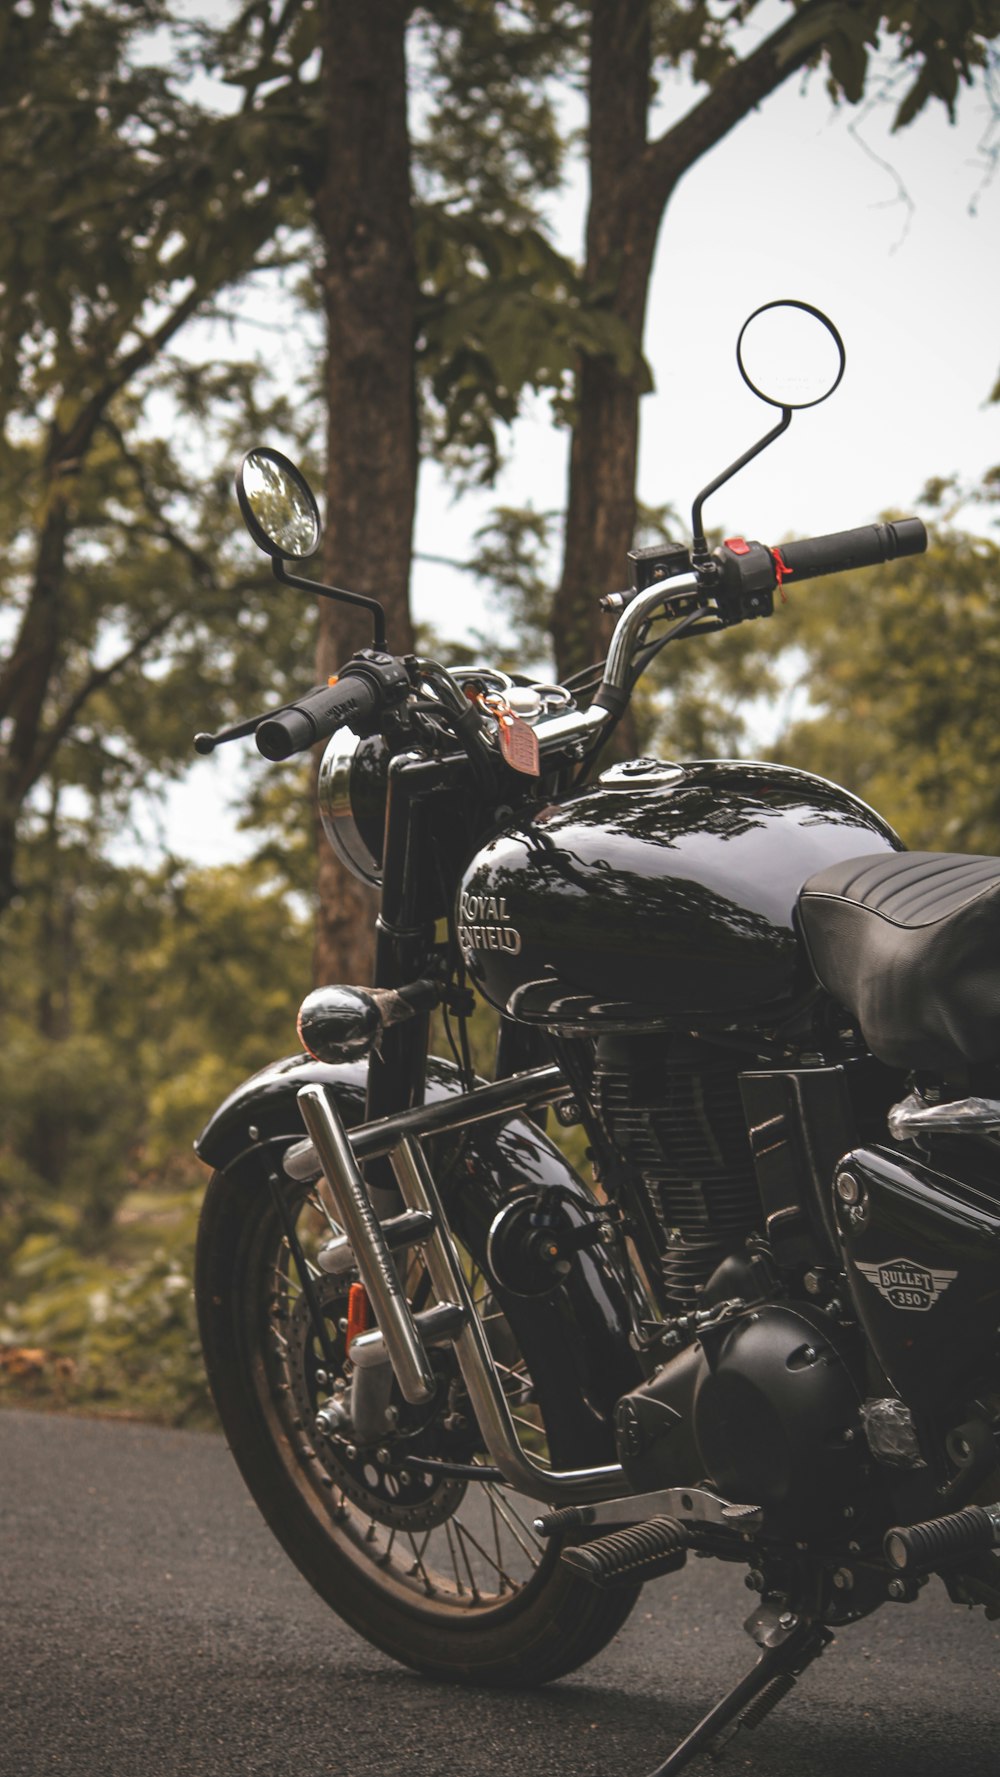 motocicleta preta estacionada perto de árvores durante o dia